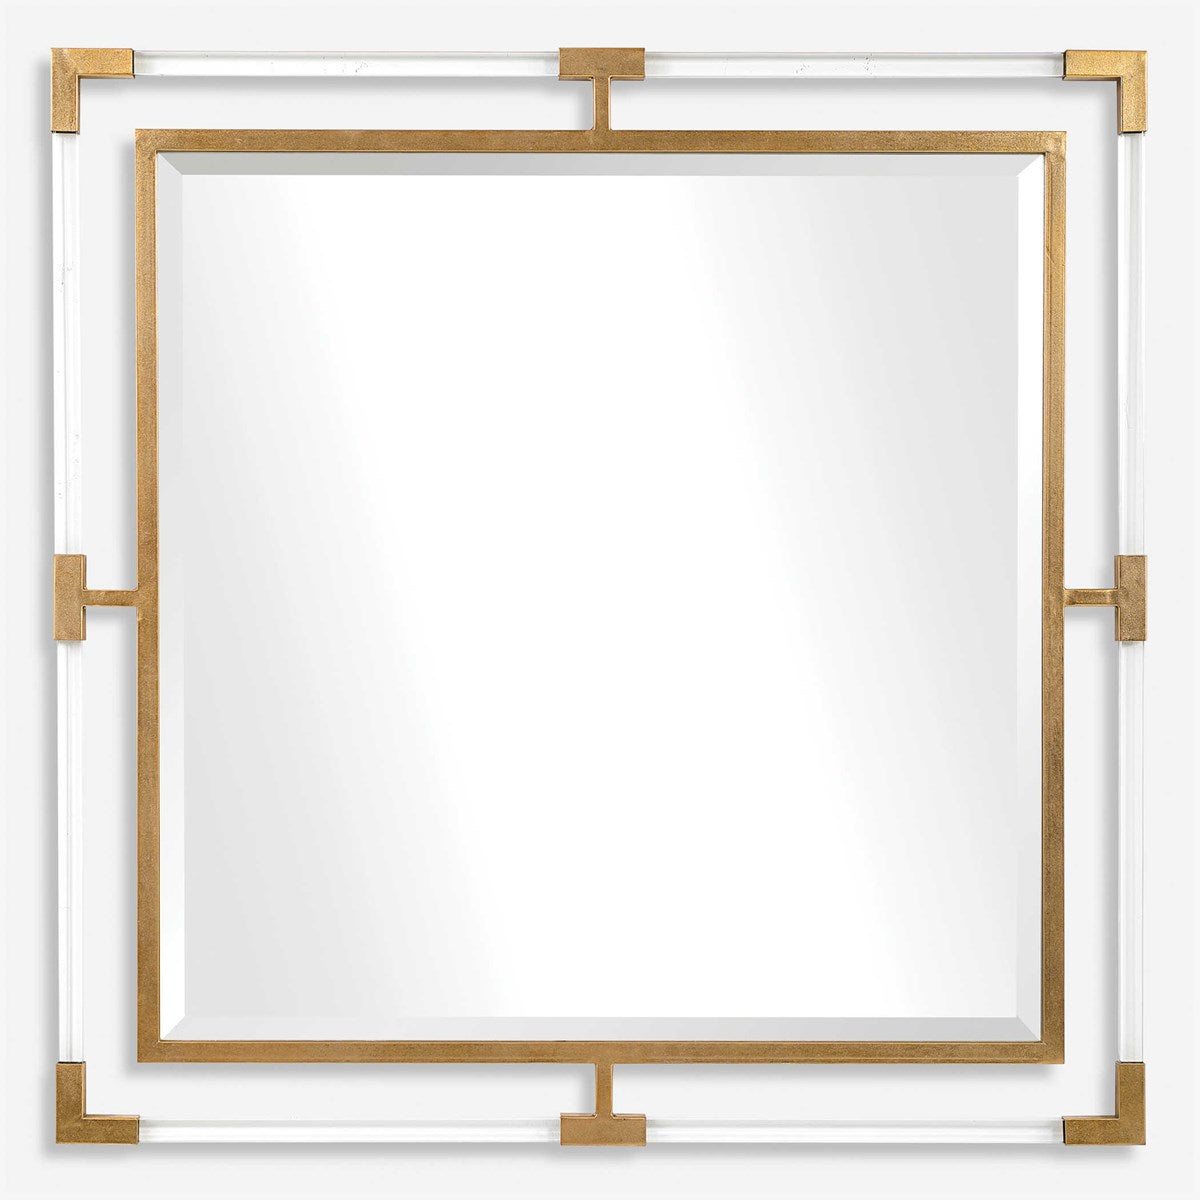 Balkan Golden Square Mirror-Uttermost-UTTM-09714-Mirrors-1-France and Son